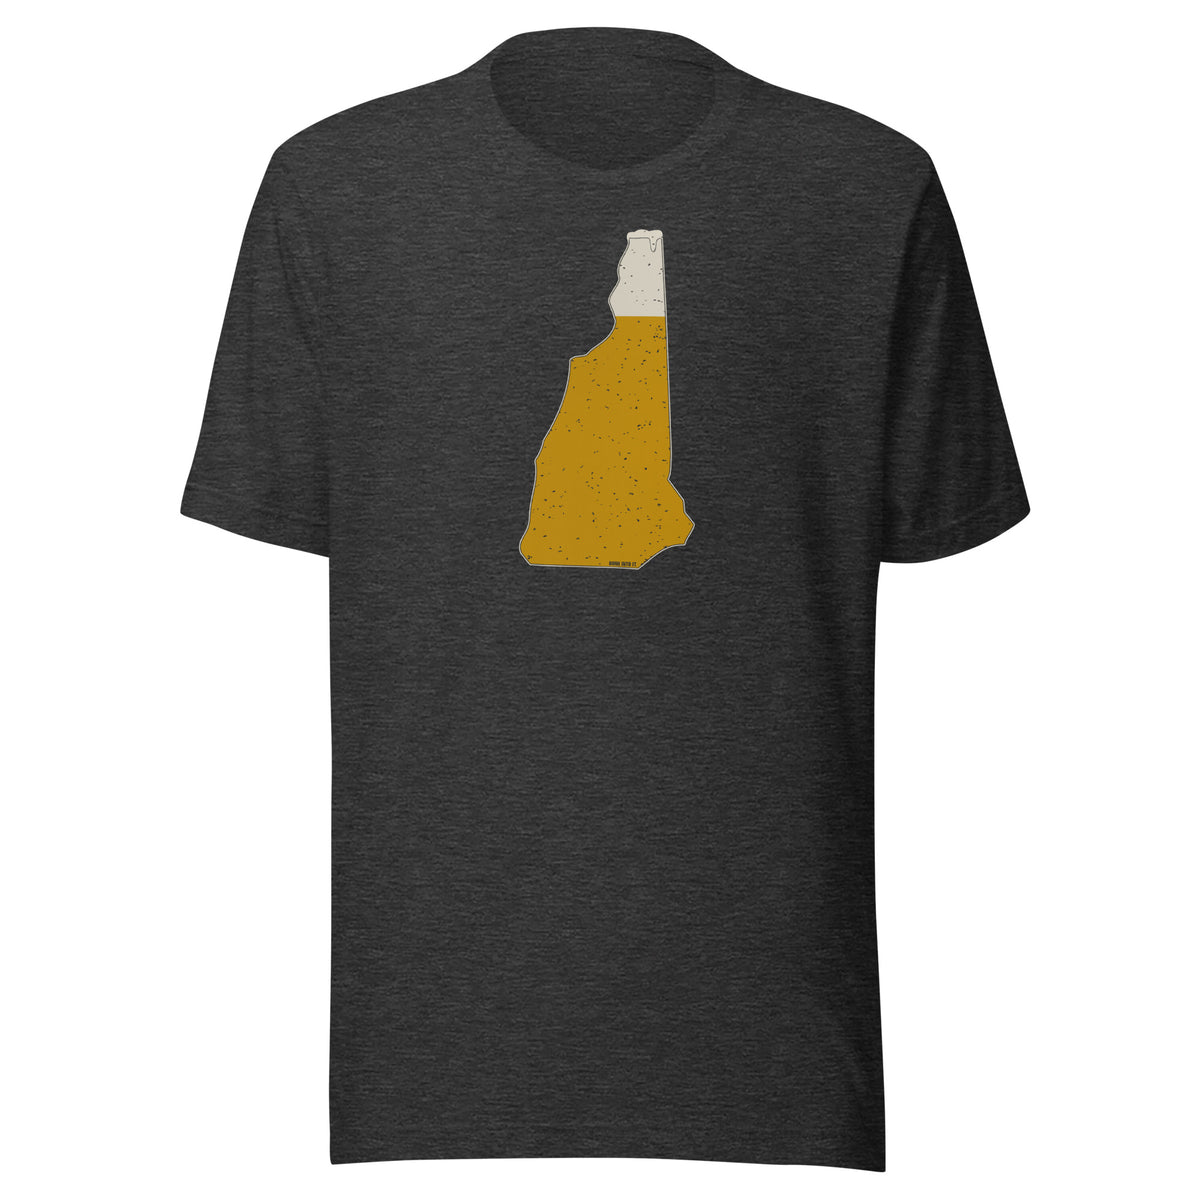 New Hampshire On Tap Unisex t-shirt